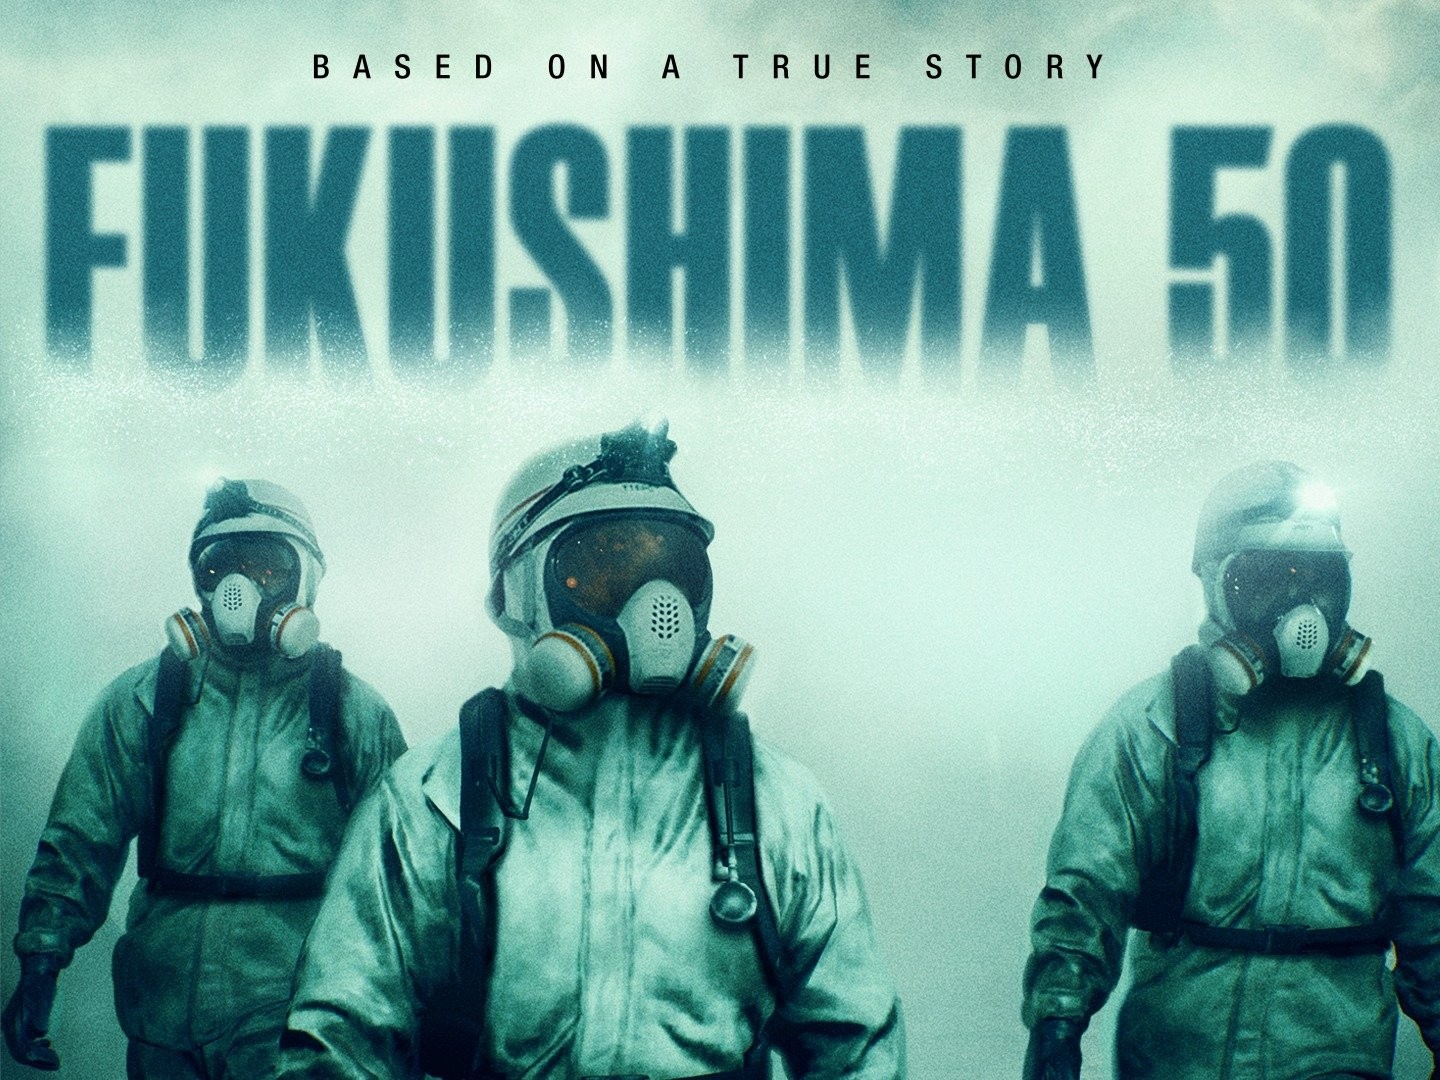 Fukushima 50 ฟุกุชิมะ 50  BY KUBET